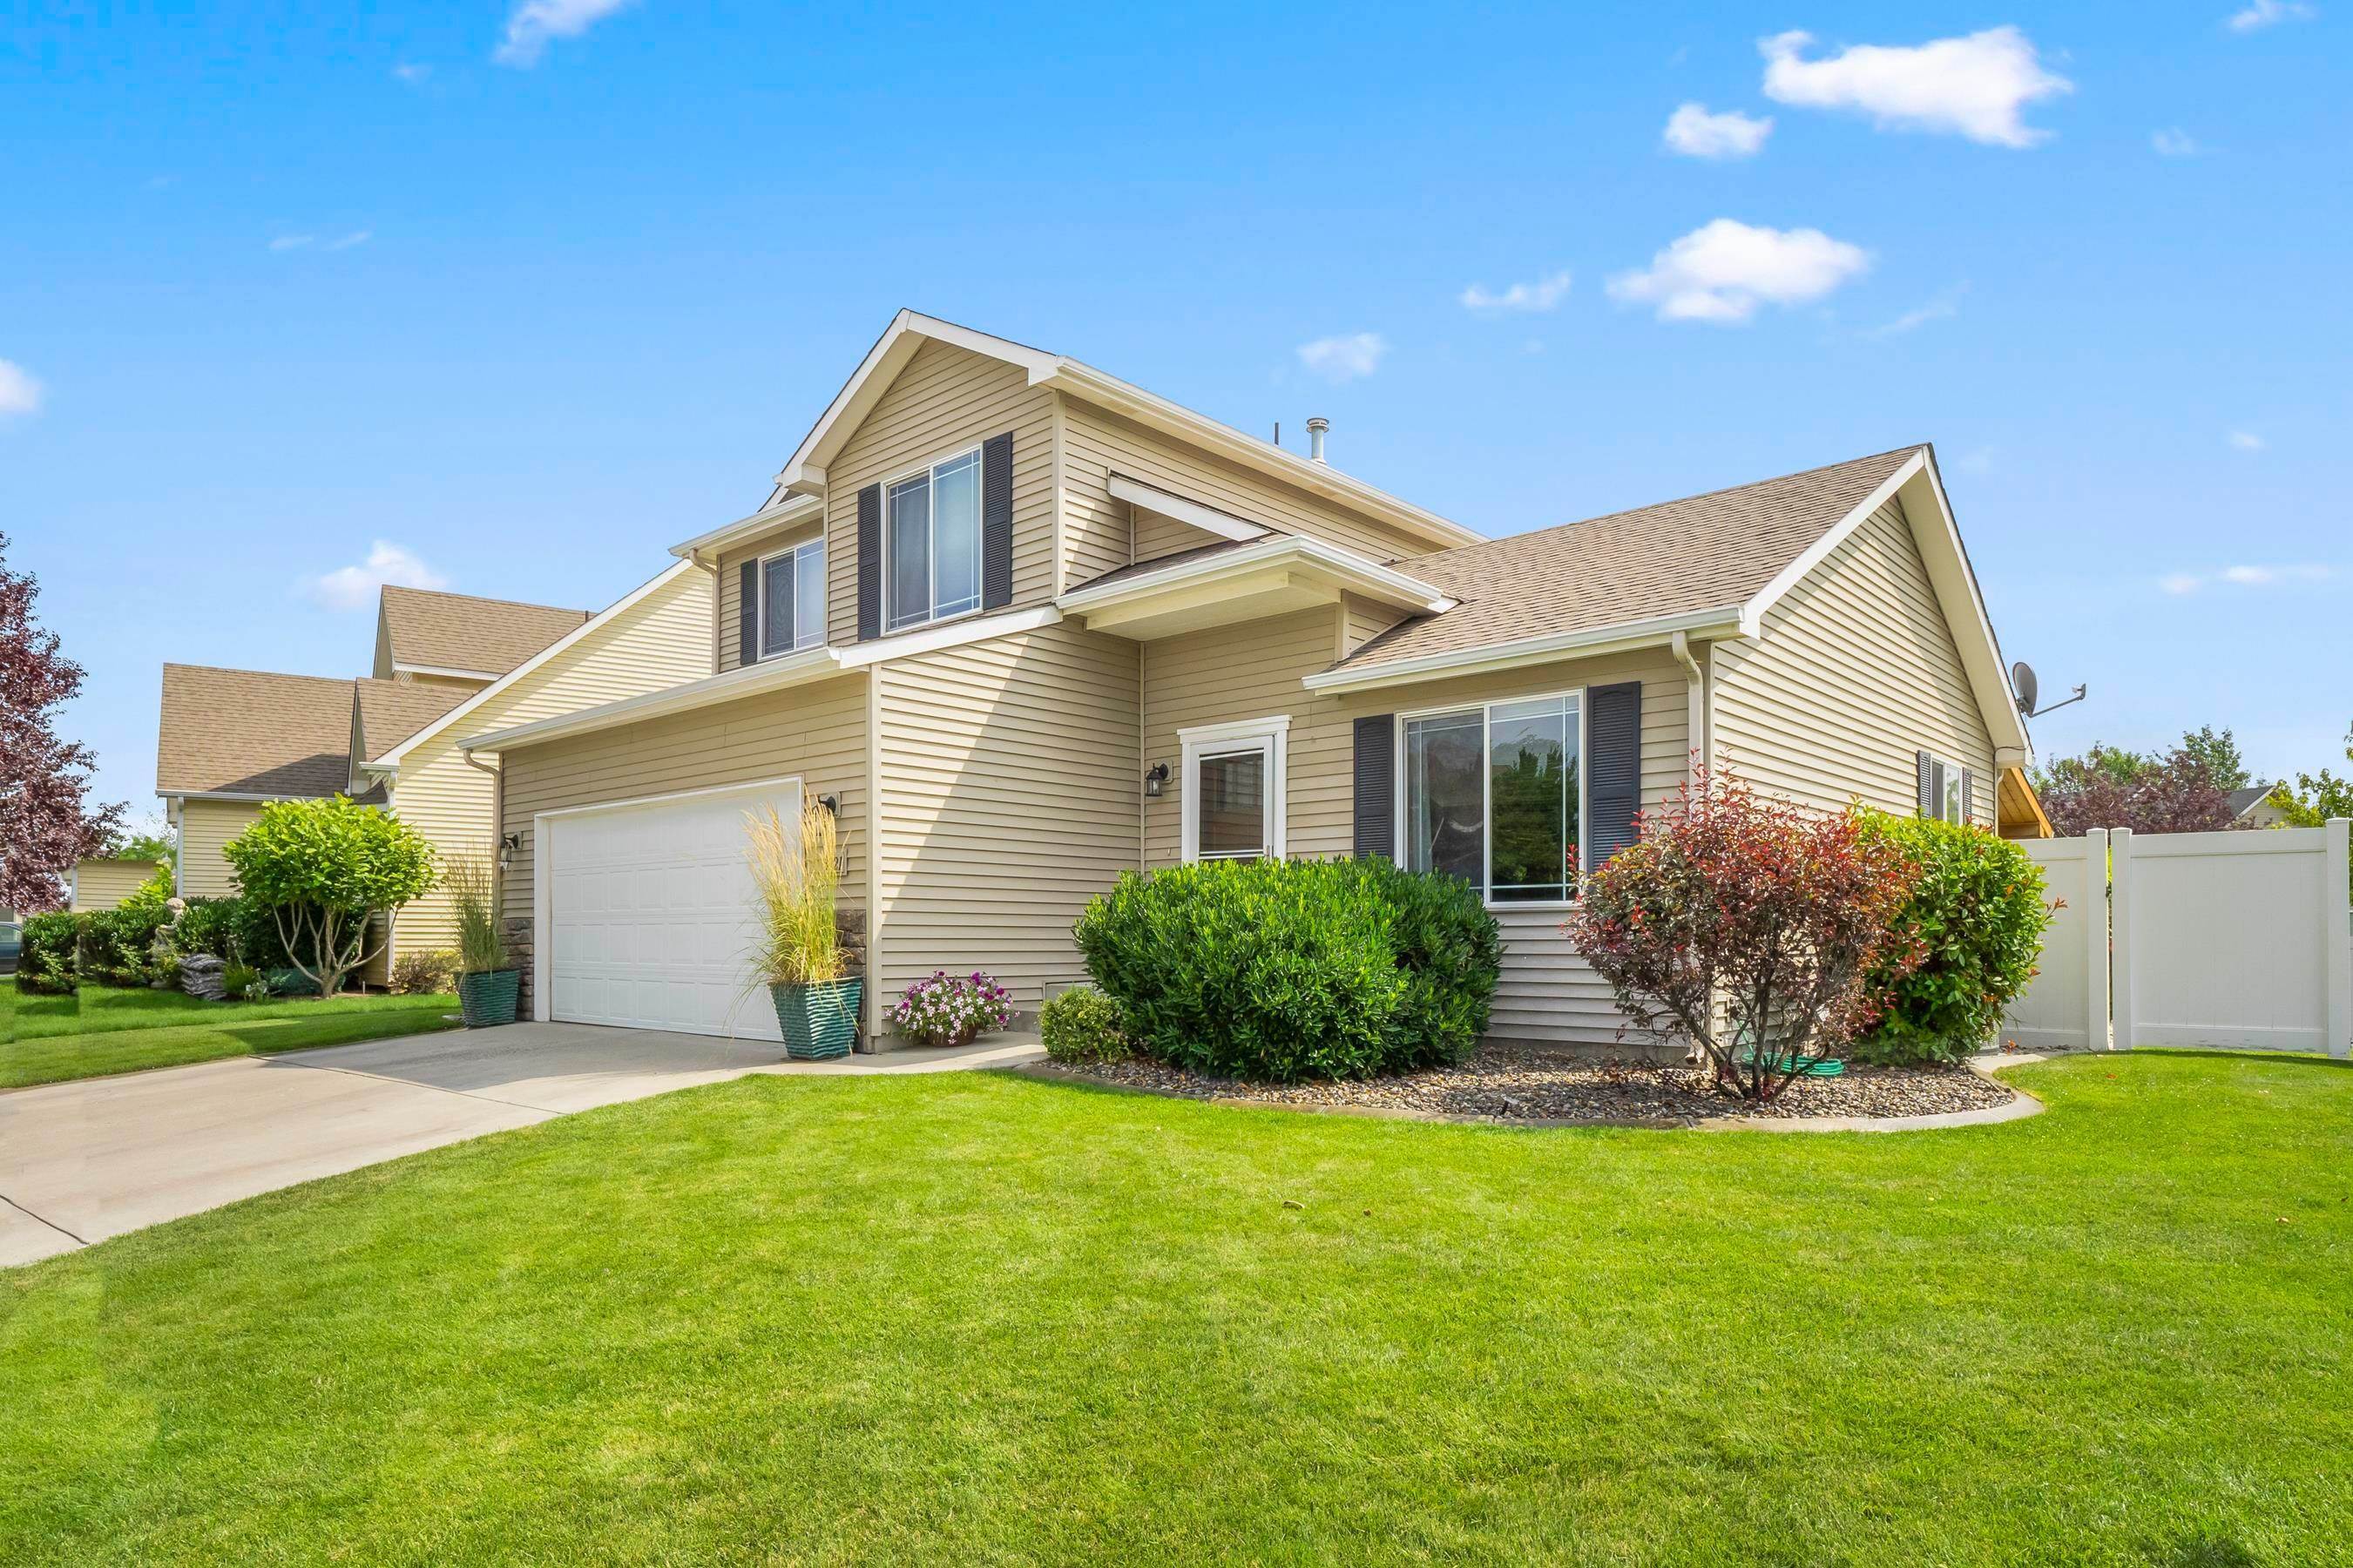 2. Single Family Homes for Sale at 3721 S Vercler Lane Spokane Valley, Washington 99206 United States